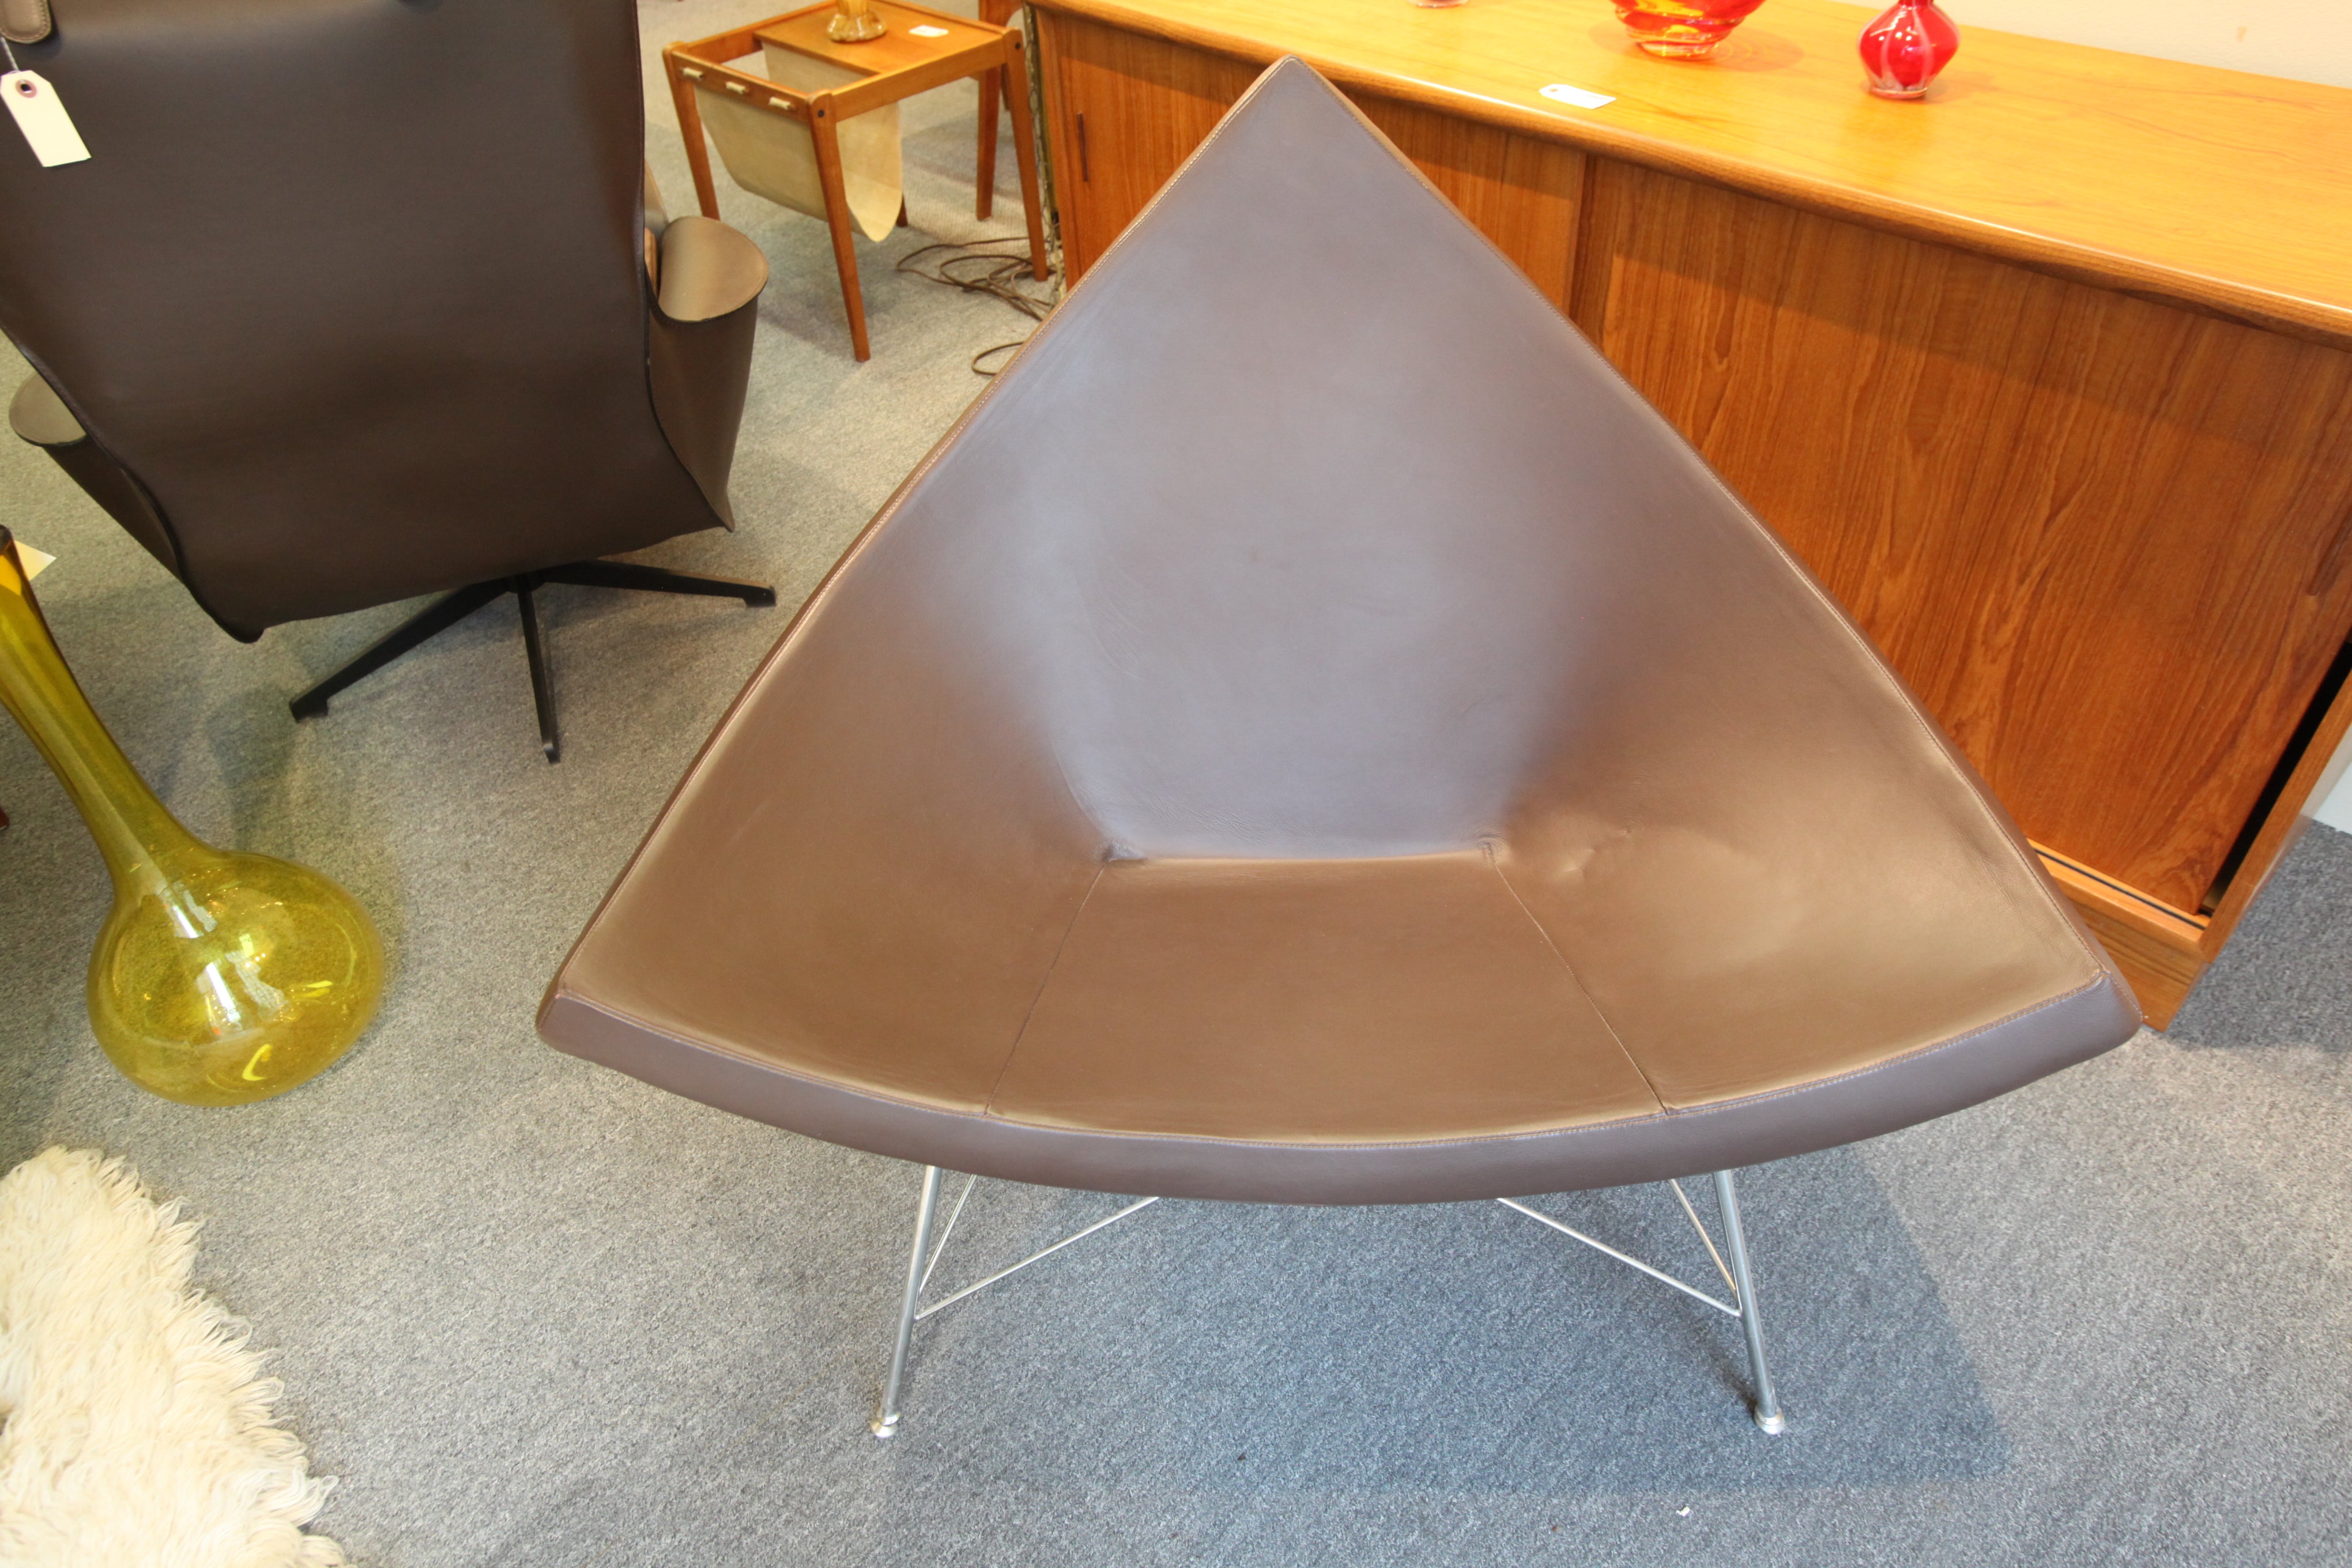 George Nelson Coconut Chair (Replica) 42"W x 33.5"H x 29"D)